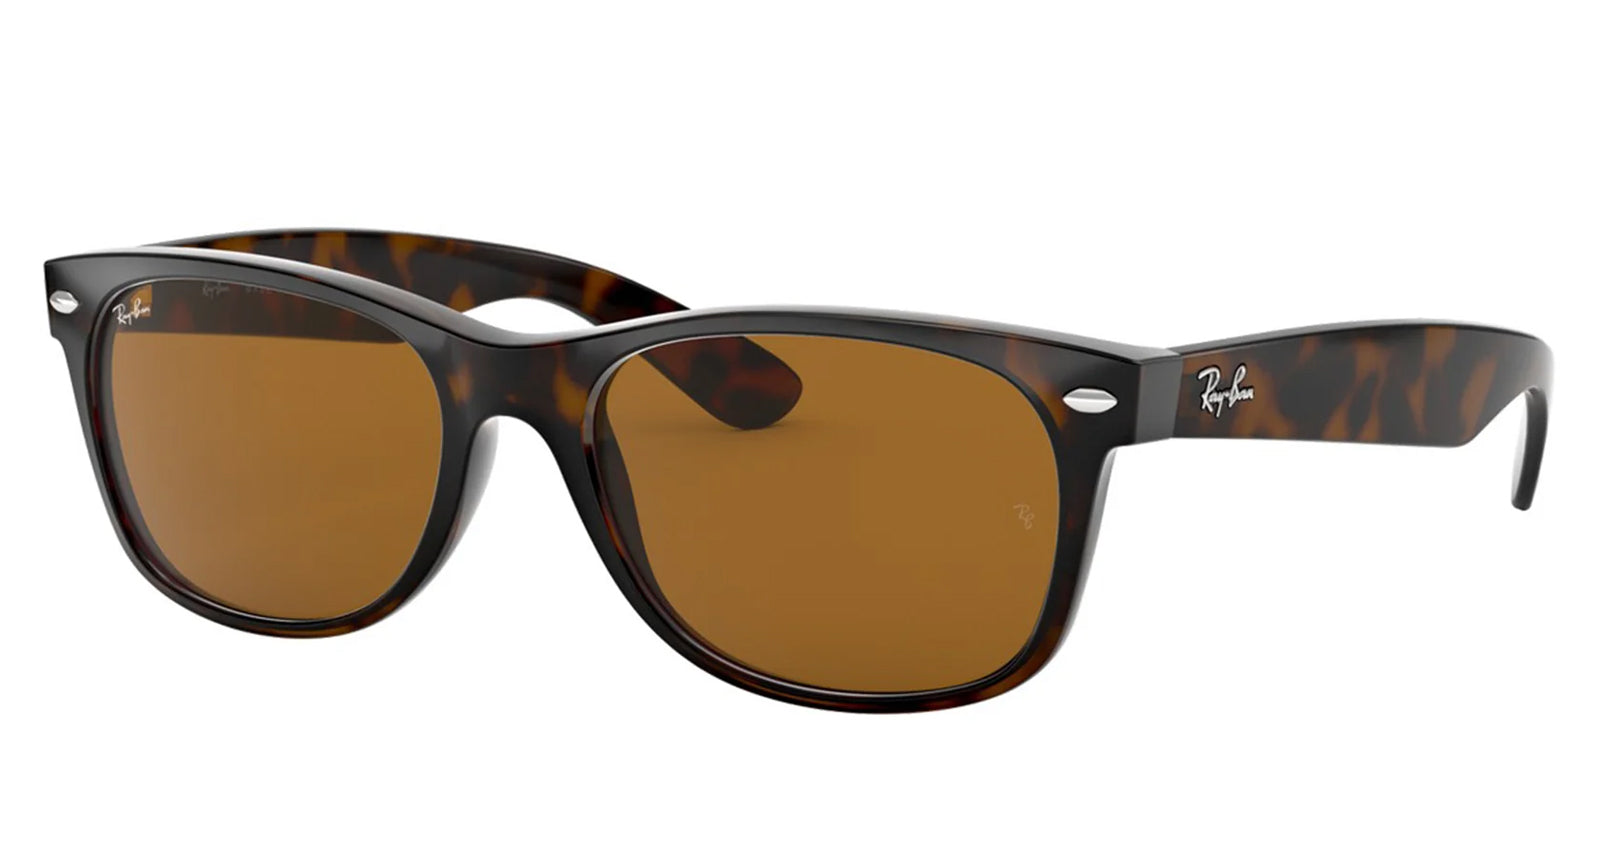 
  Ray-Ban New Wayfarer Classic Adult Lifestyle Sunglasses 